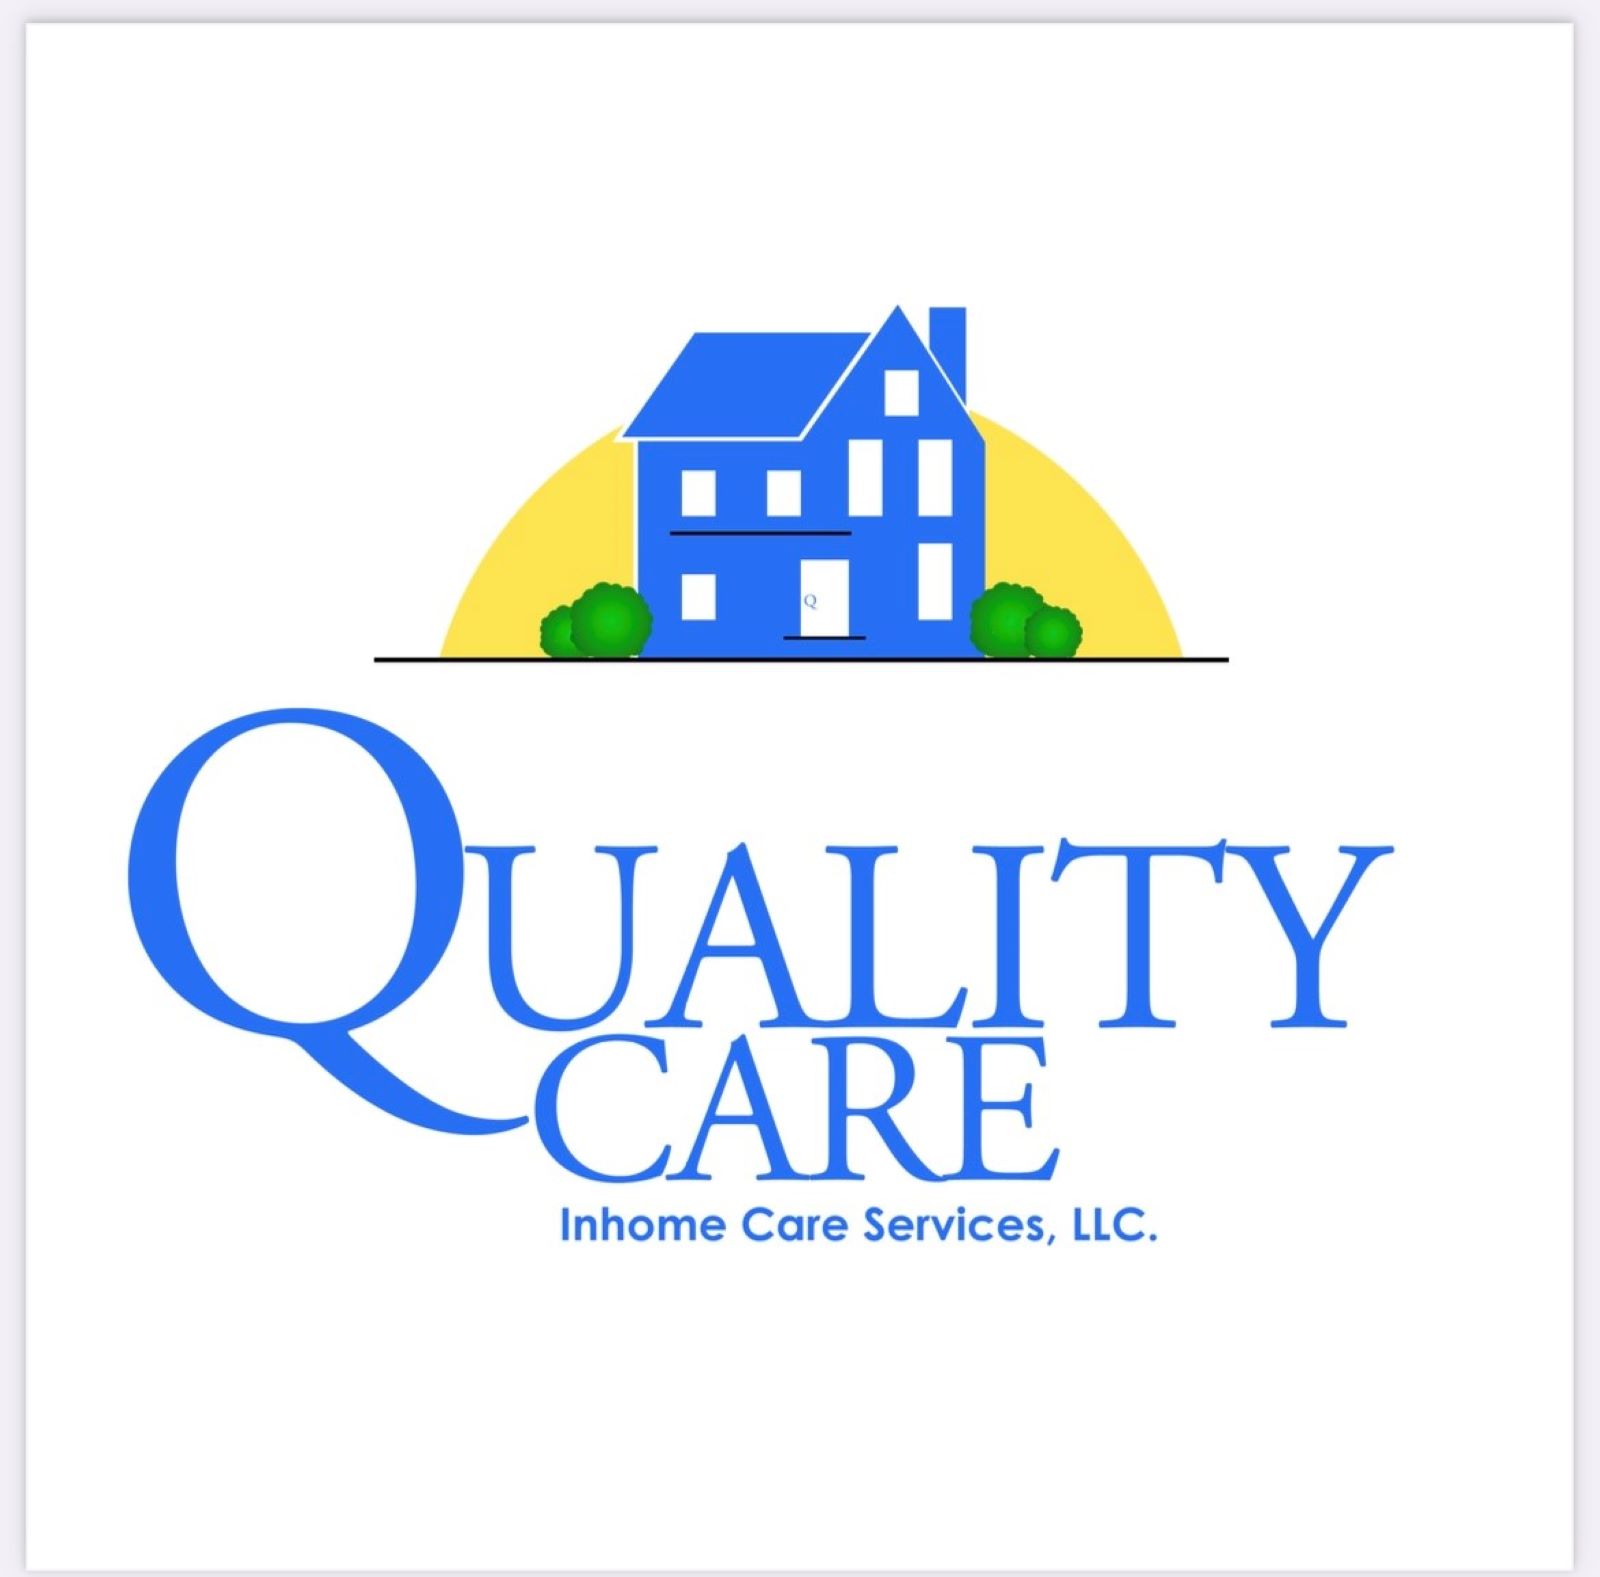 Quality Care Inhome Care Services of Buckhead, GA at Atlanta, GA